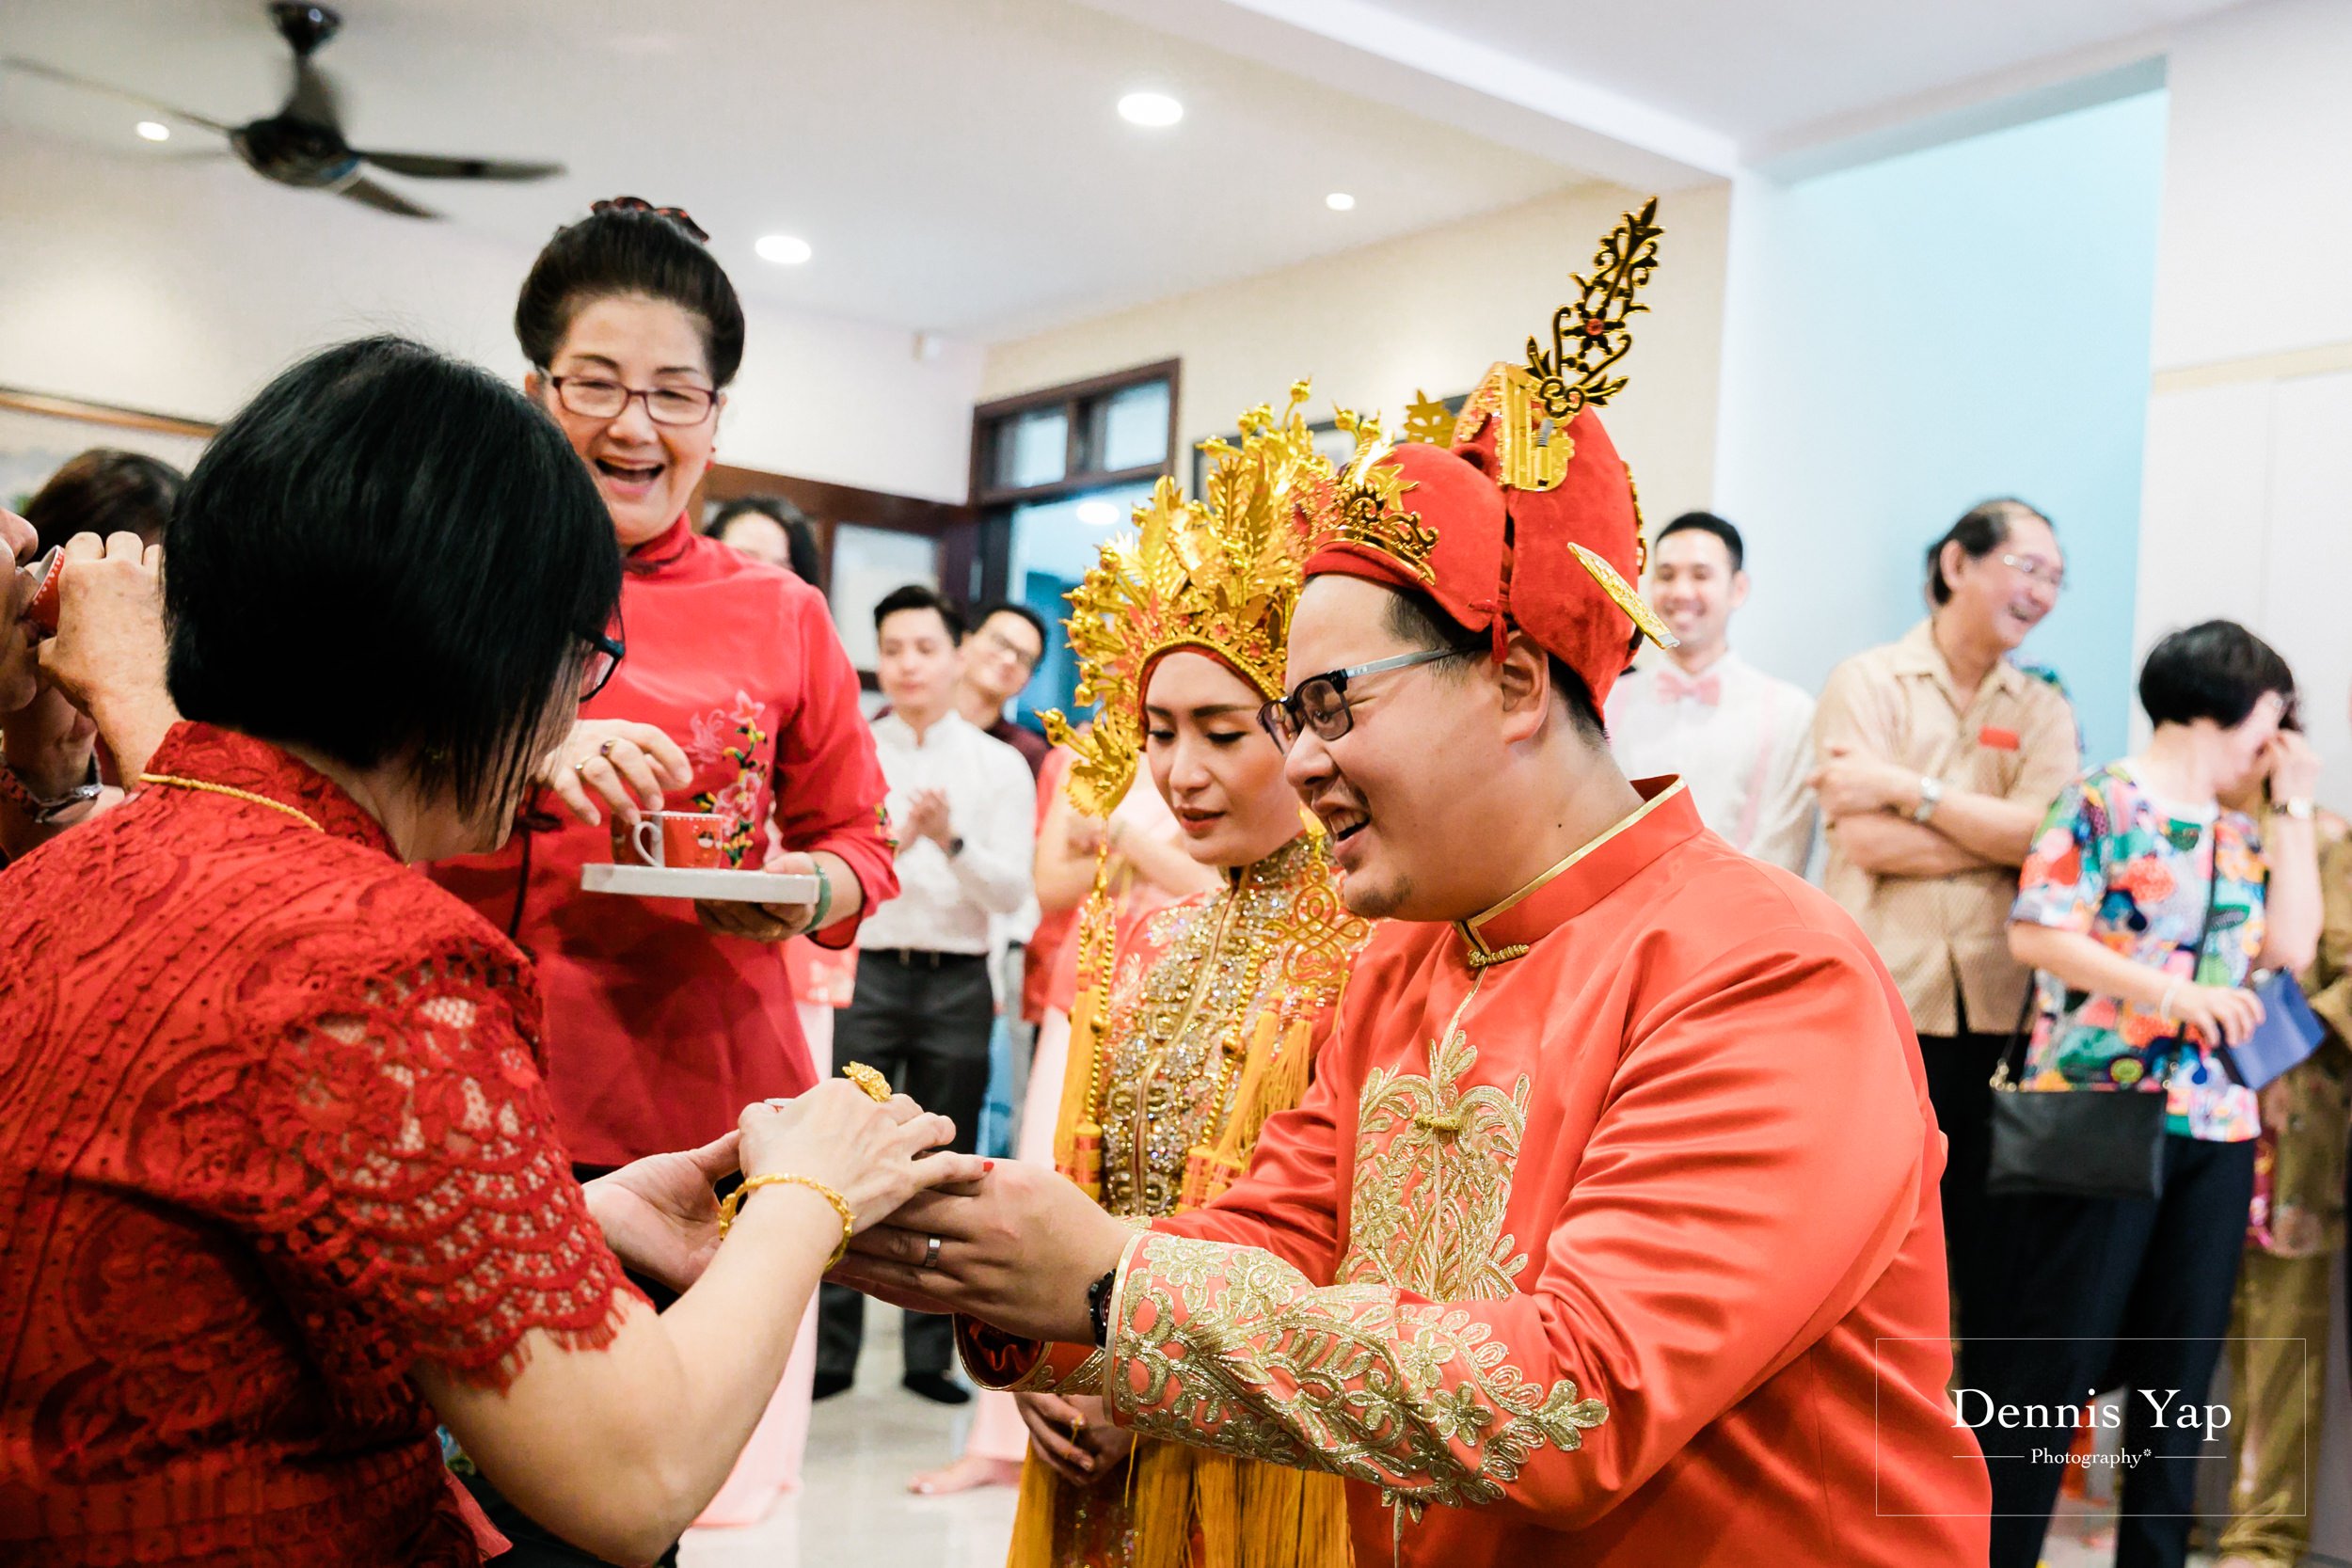 chen tze yek kuan morning tea ceremony wedding red gold dennis yap photography GIS-21.jpg